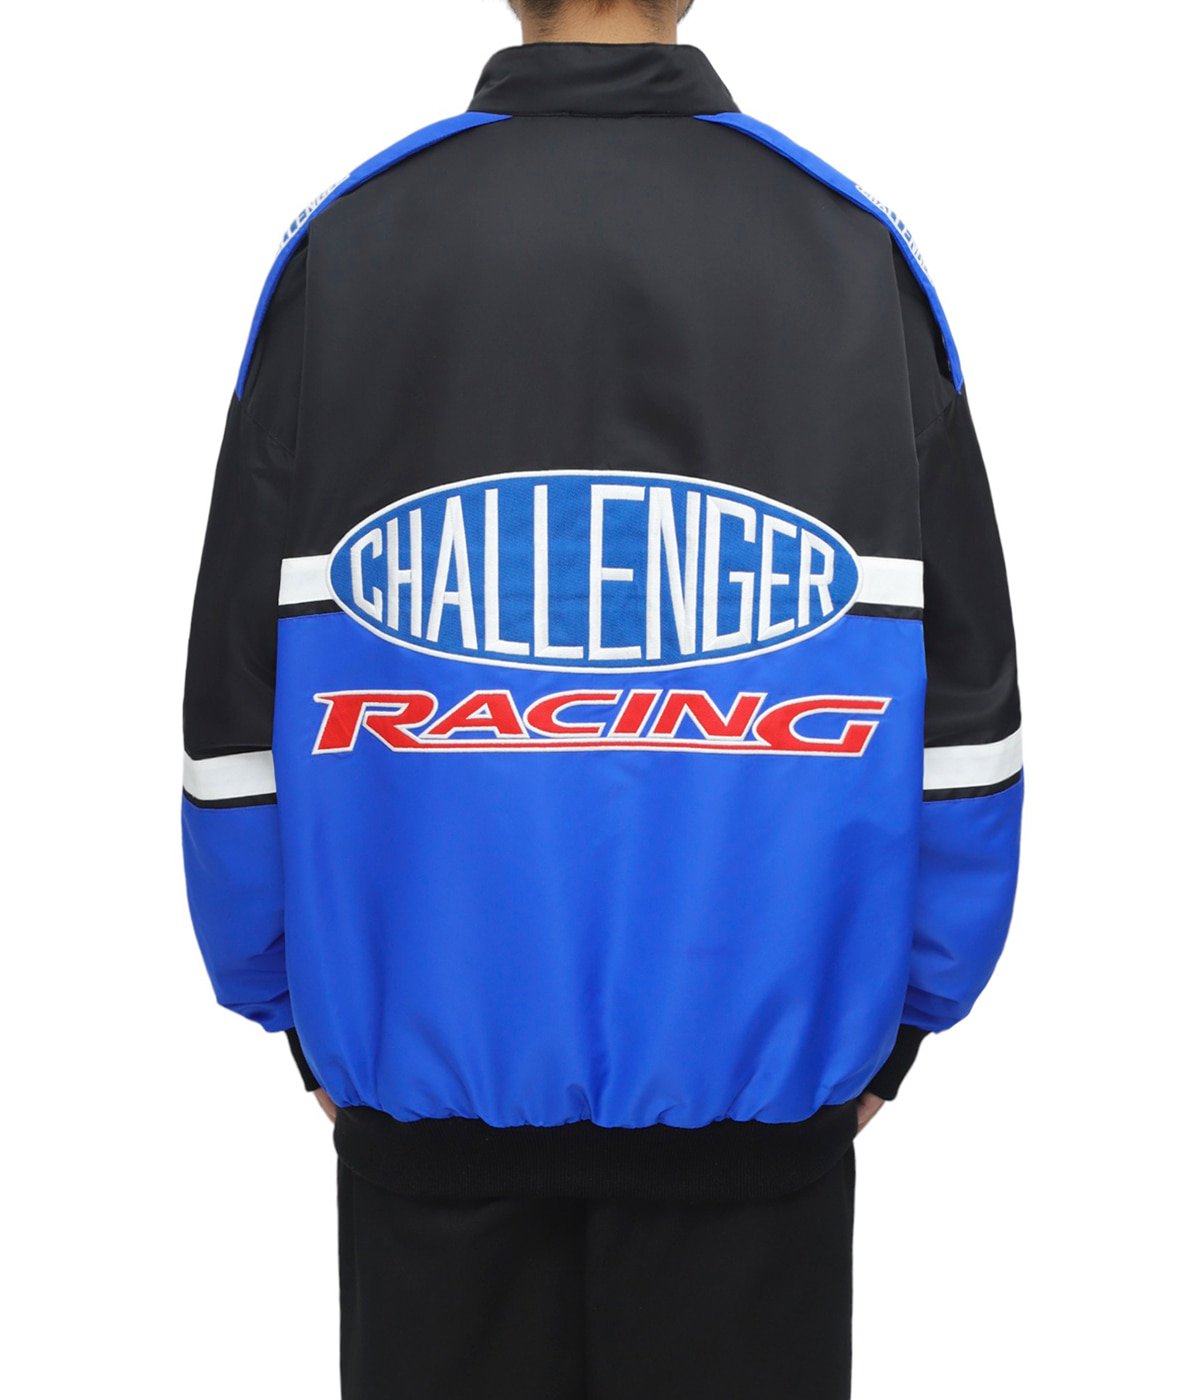 CMC RACING JACKT | CHALLENGER(チャレンジャー) / アウター